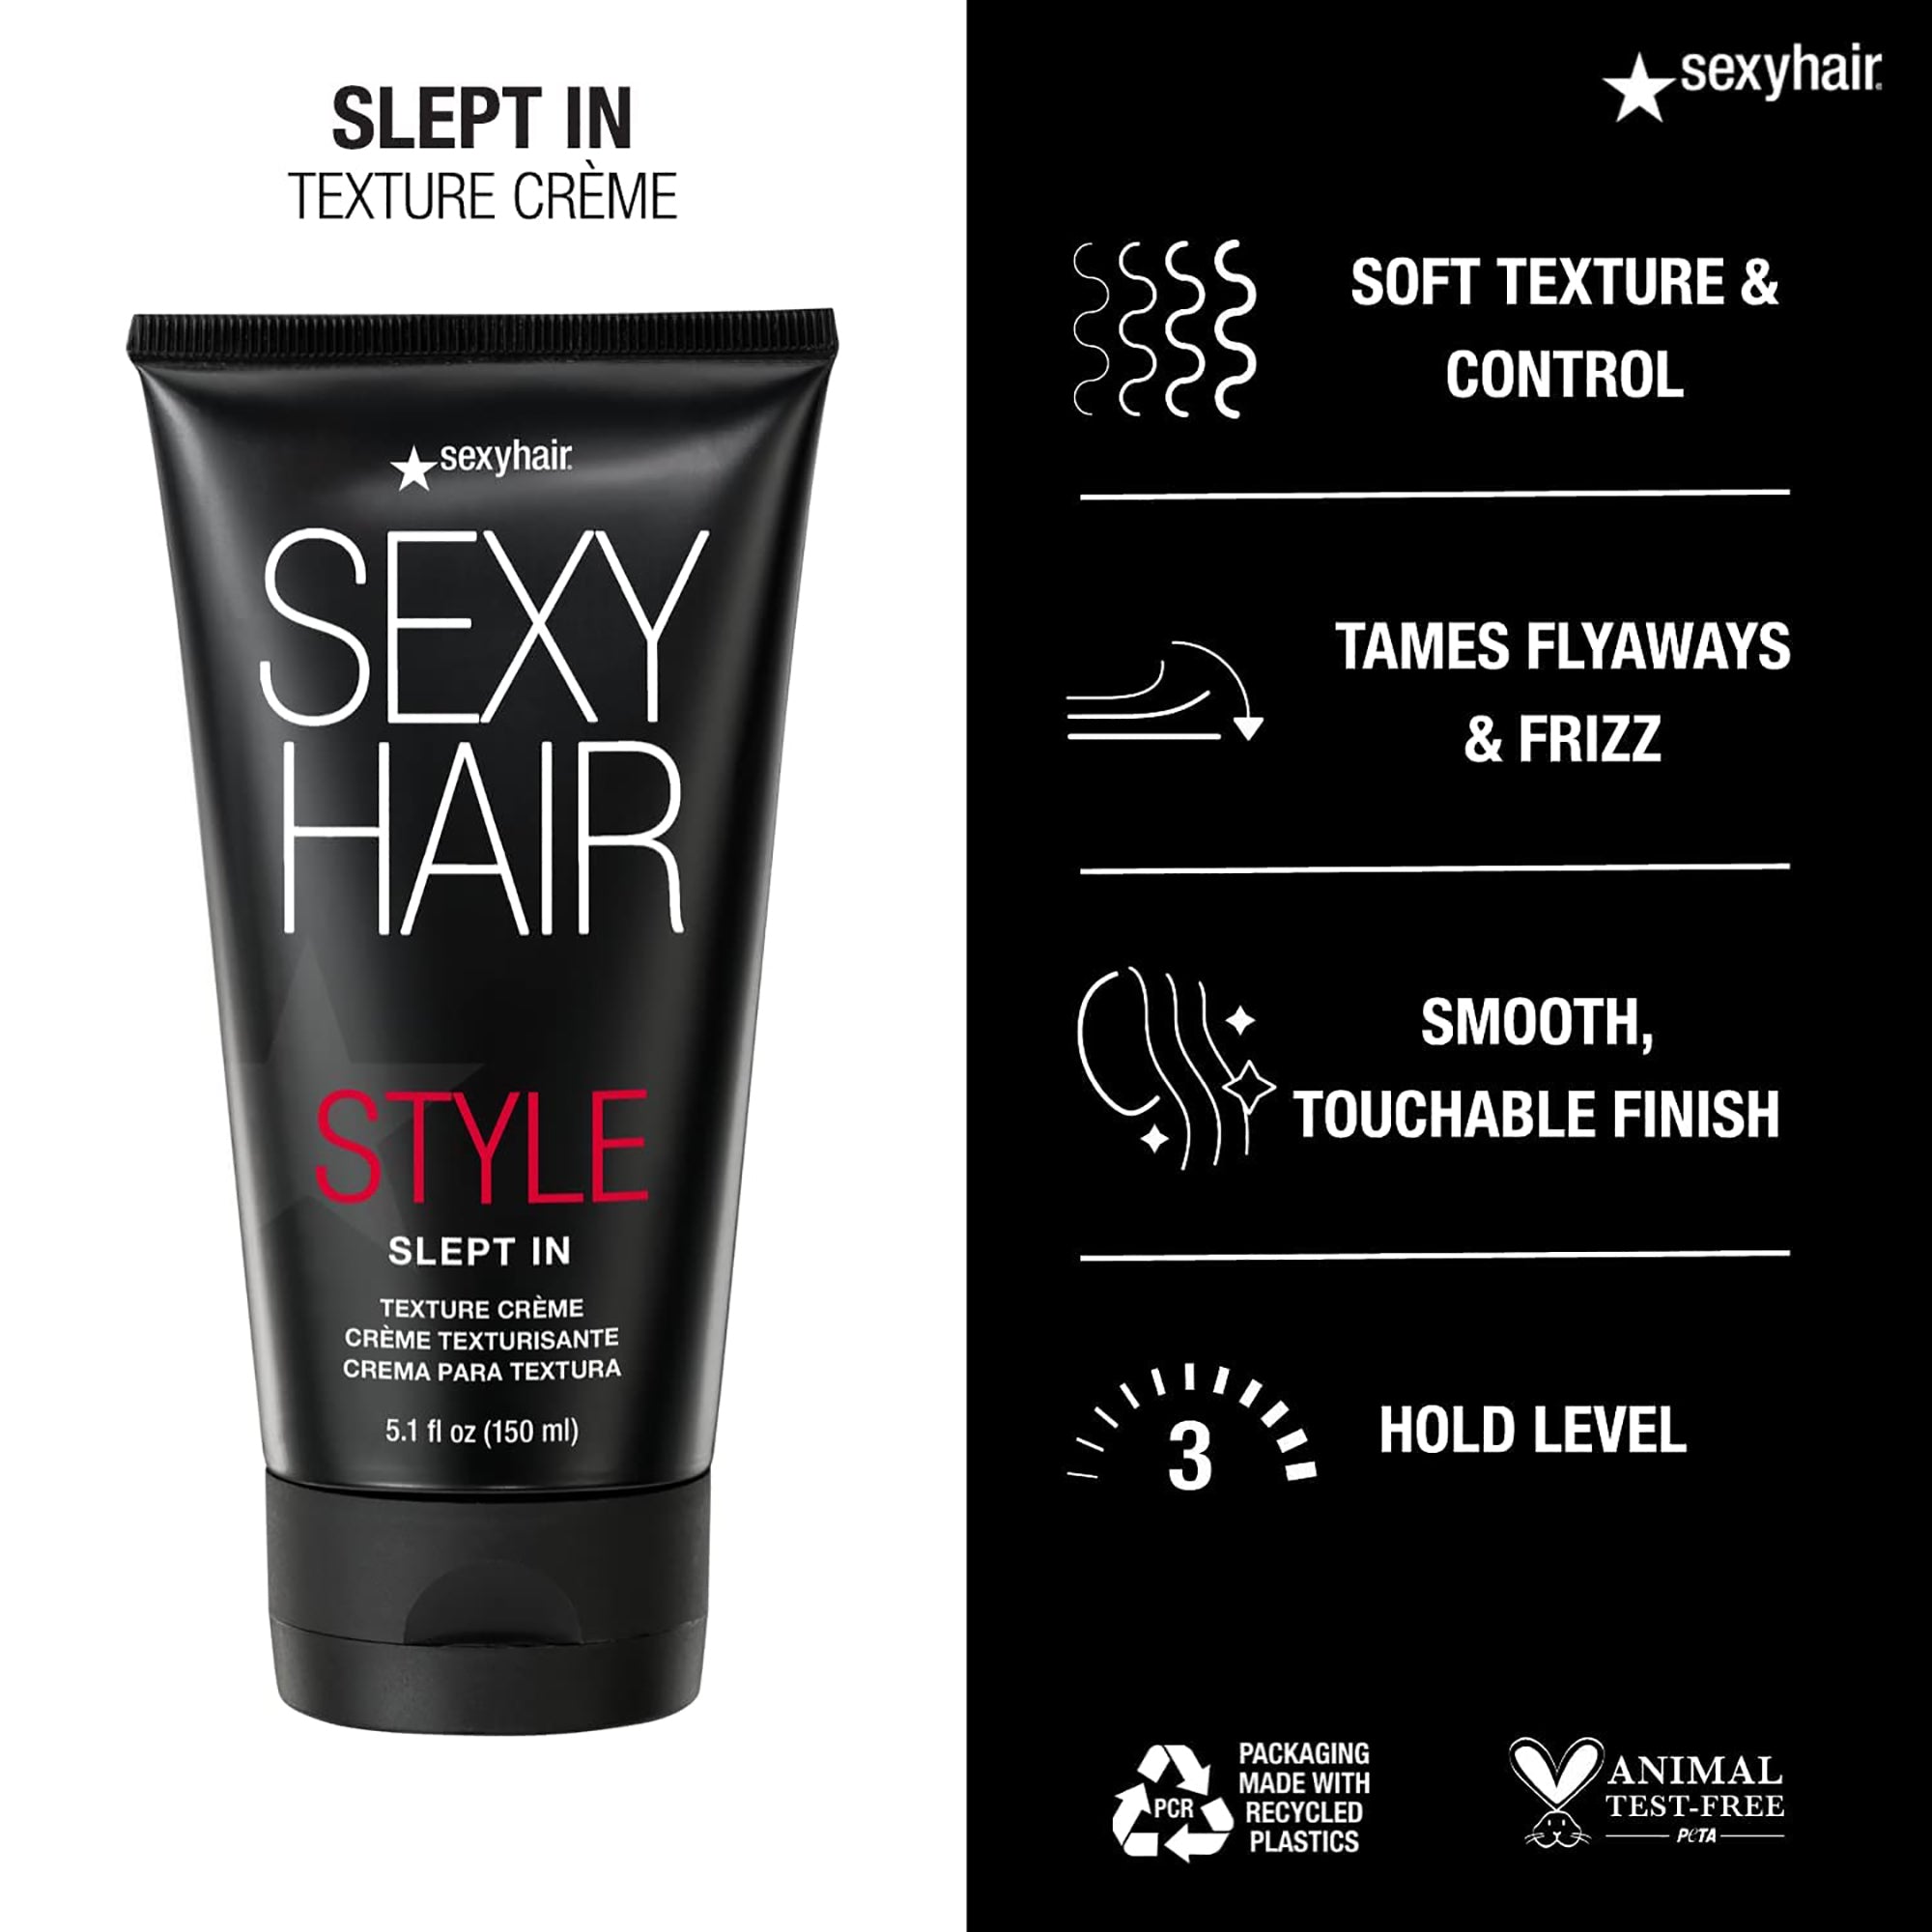 Sexy Hair Style SexyHair Slept In Texture Creme / 5.1OZ